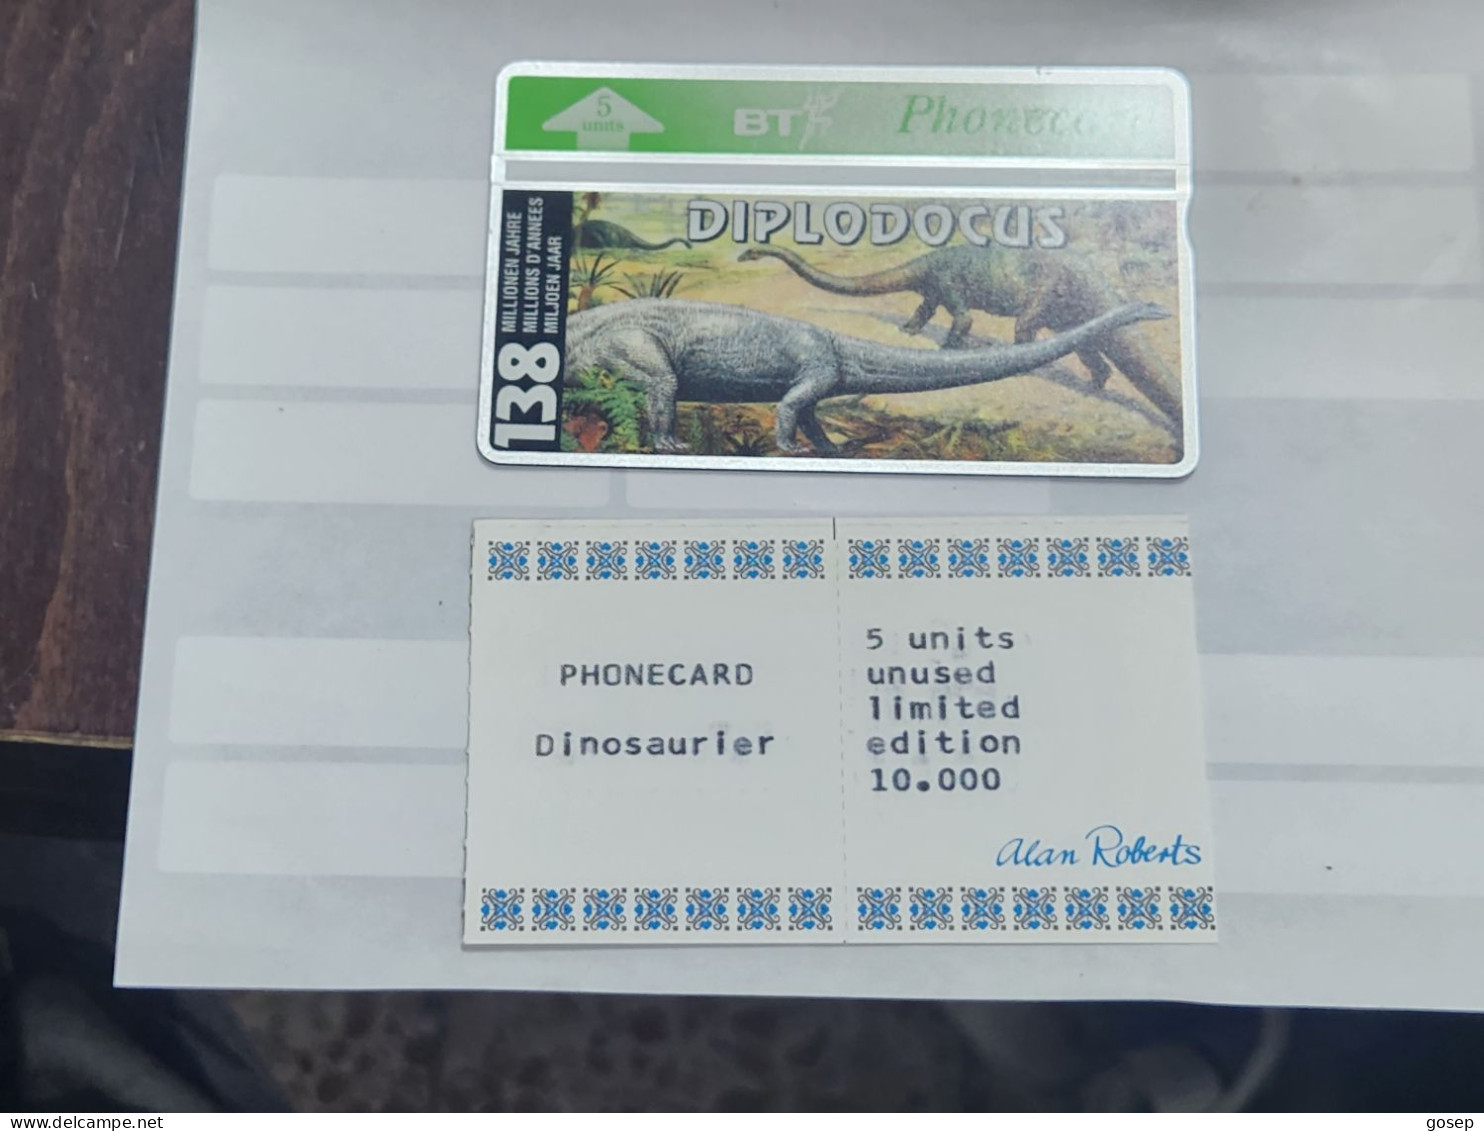 United Kingdom-(BTO-070)-Dinosaur Series-(J)Dilpodocus-(91)(5units)(402E08610)price Cataloge MINT-12.00£-1card Prepiad - BT Buitenlandse Uitgaven